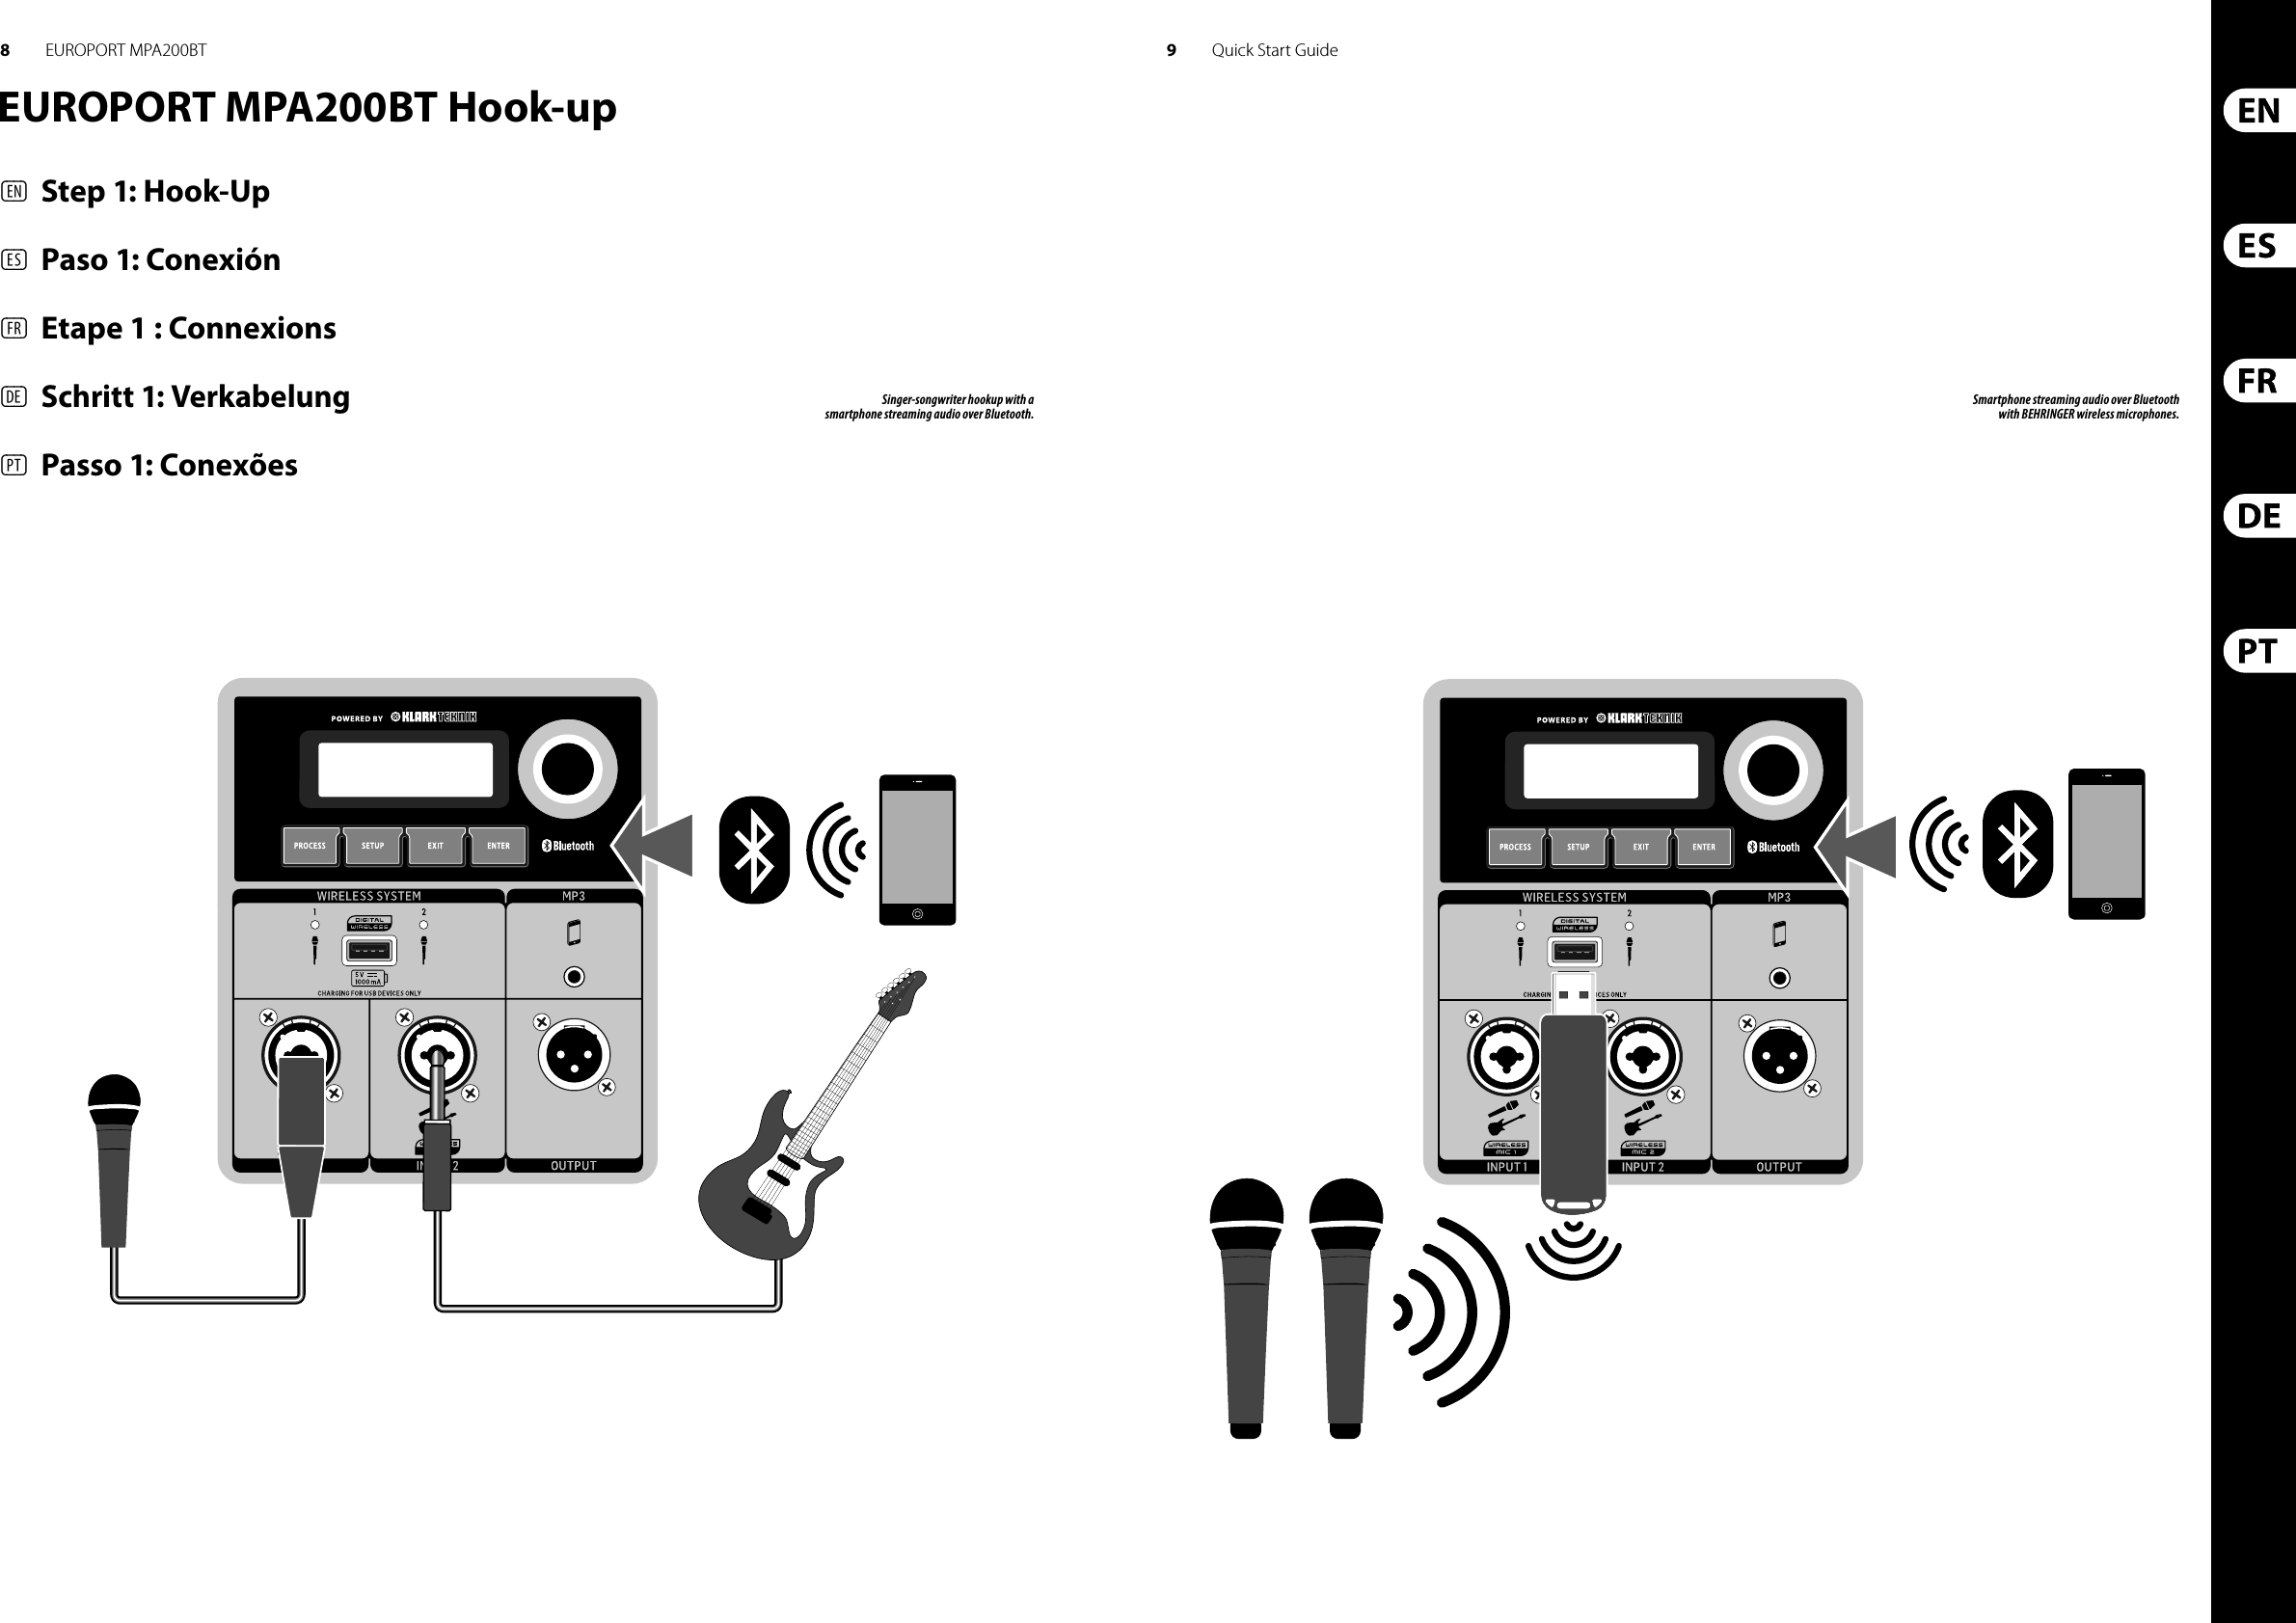 8 9EUROPORT MPA200BT Quick Start GuideEUROPORT MPA200BT Hook-up(EN)  Step 1: Hook-Up(ES)  Paso 1: Conexión(FR)  Etape 1 : Connexions(DE) Schritt 1: Verkabelung(PT)  Passo 1: ConexõesSinger-songwriter hookup with a smartphone streaming audio over Bluetooth.Smartphone streaming audio over Bluetooth with BEHRINGER wireless microphones.